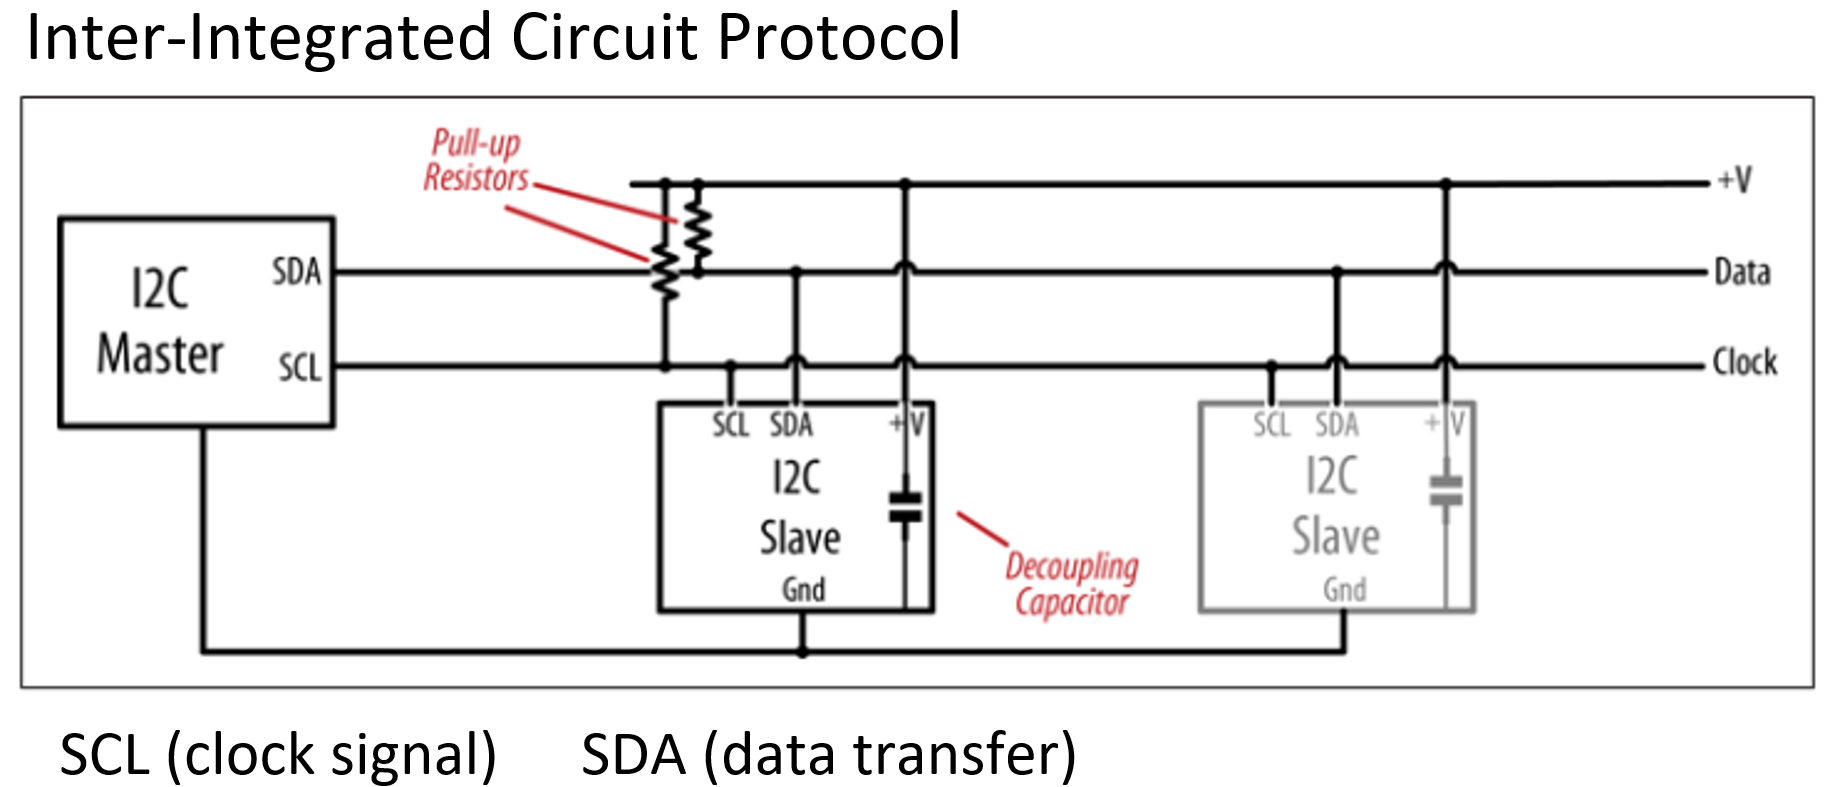 I2C Protocol